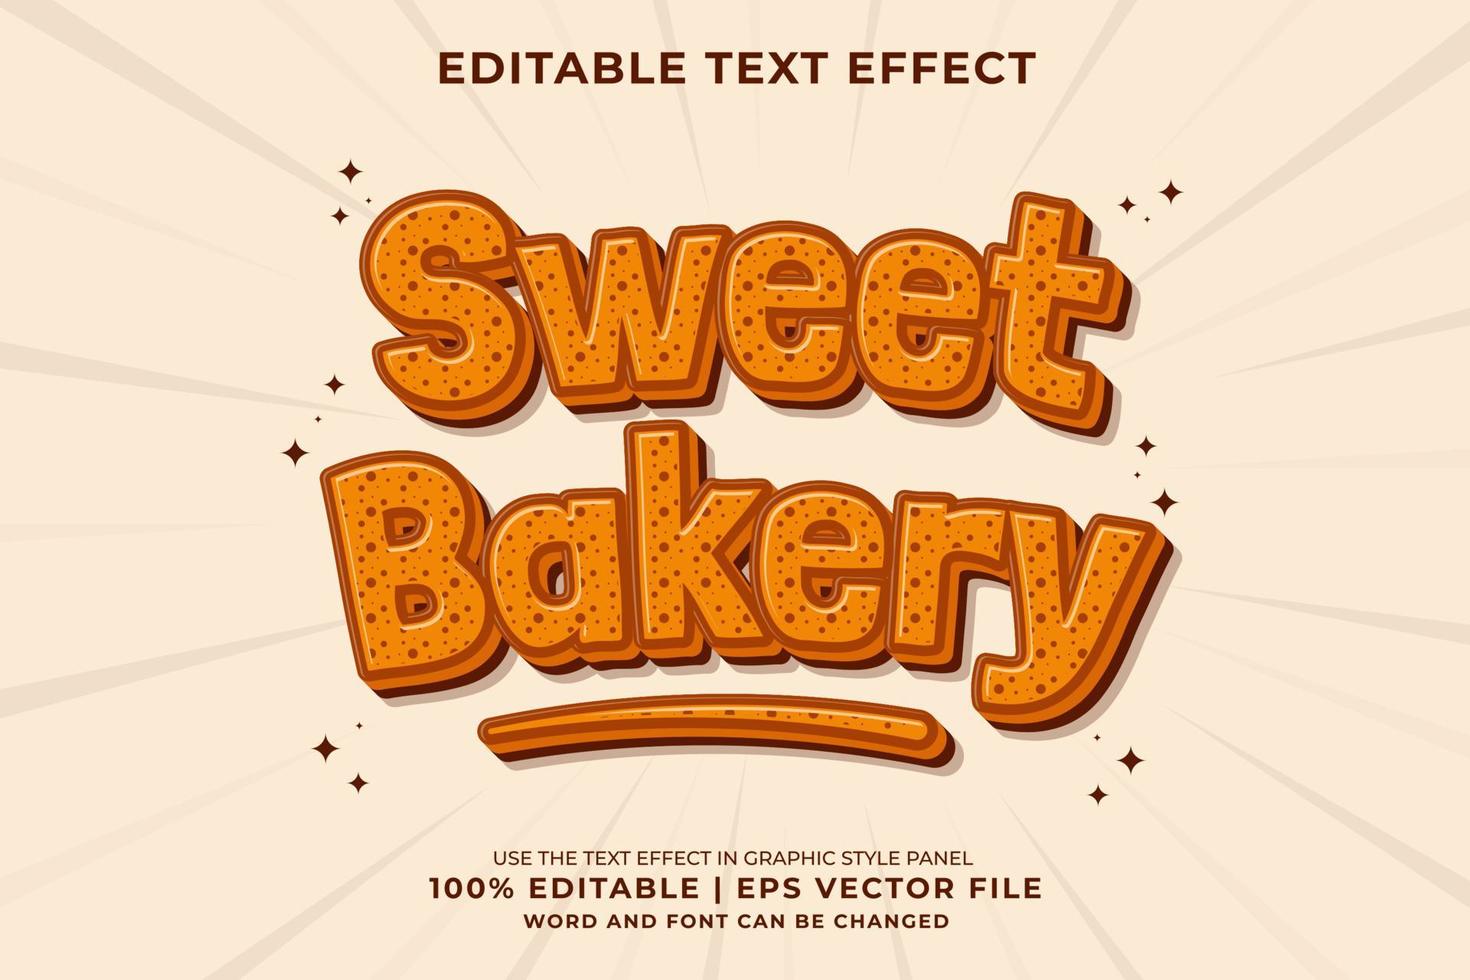 editierbarer texteffekt - süße bäckerei 3d traditioneller cartoon-vorlagenstil premium-vektor vektor